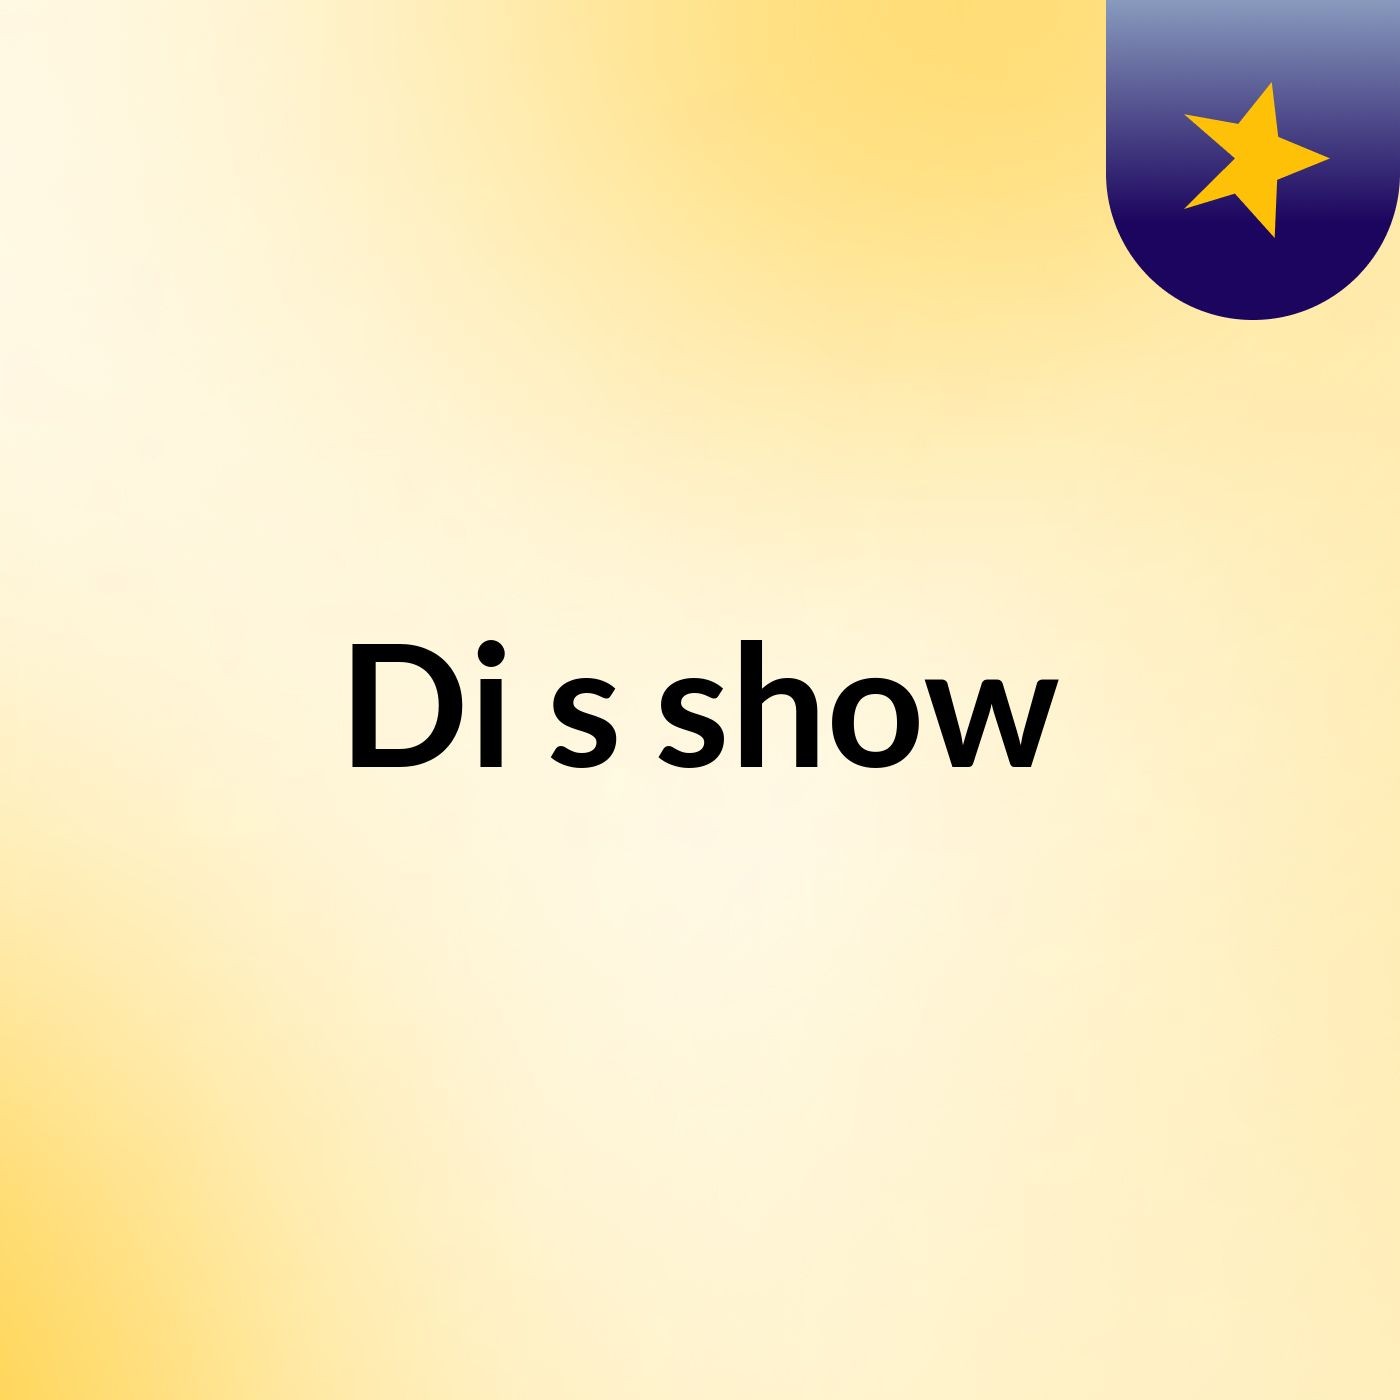 Di's show